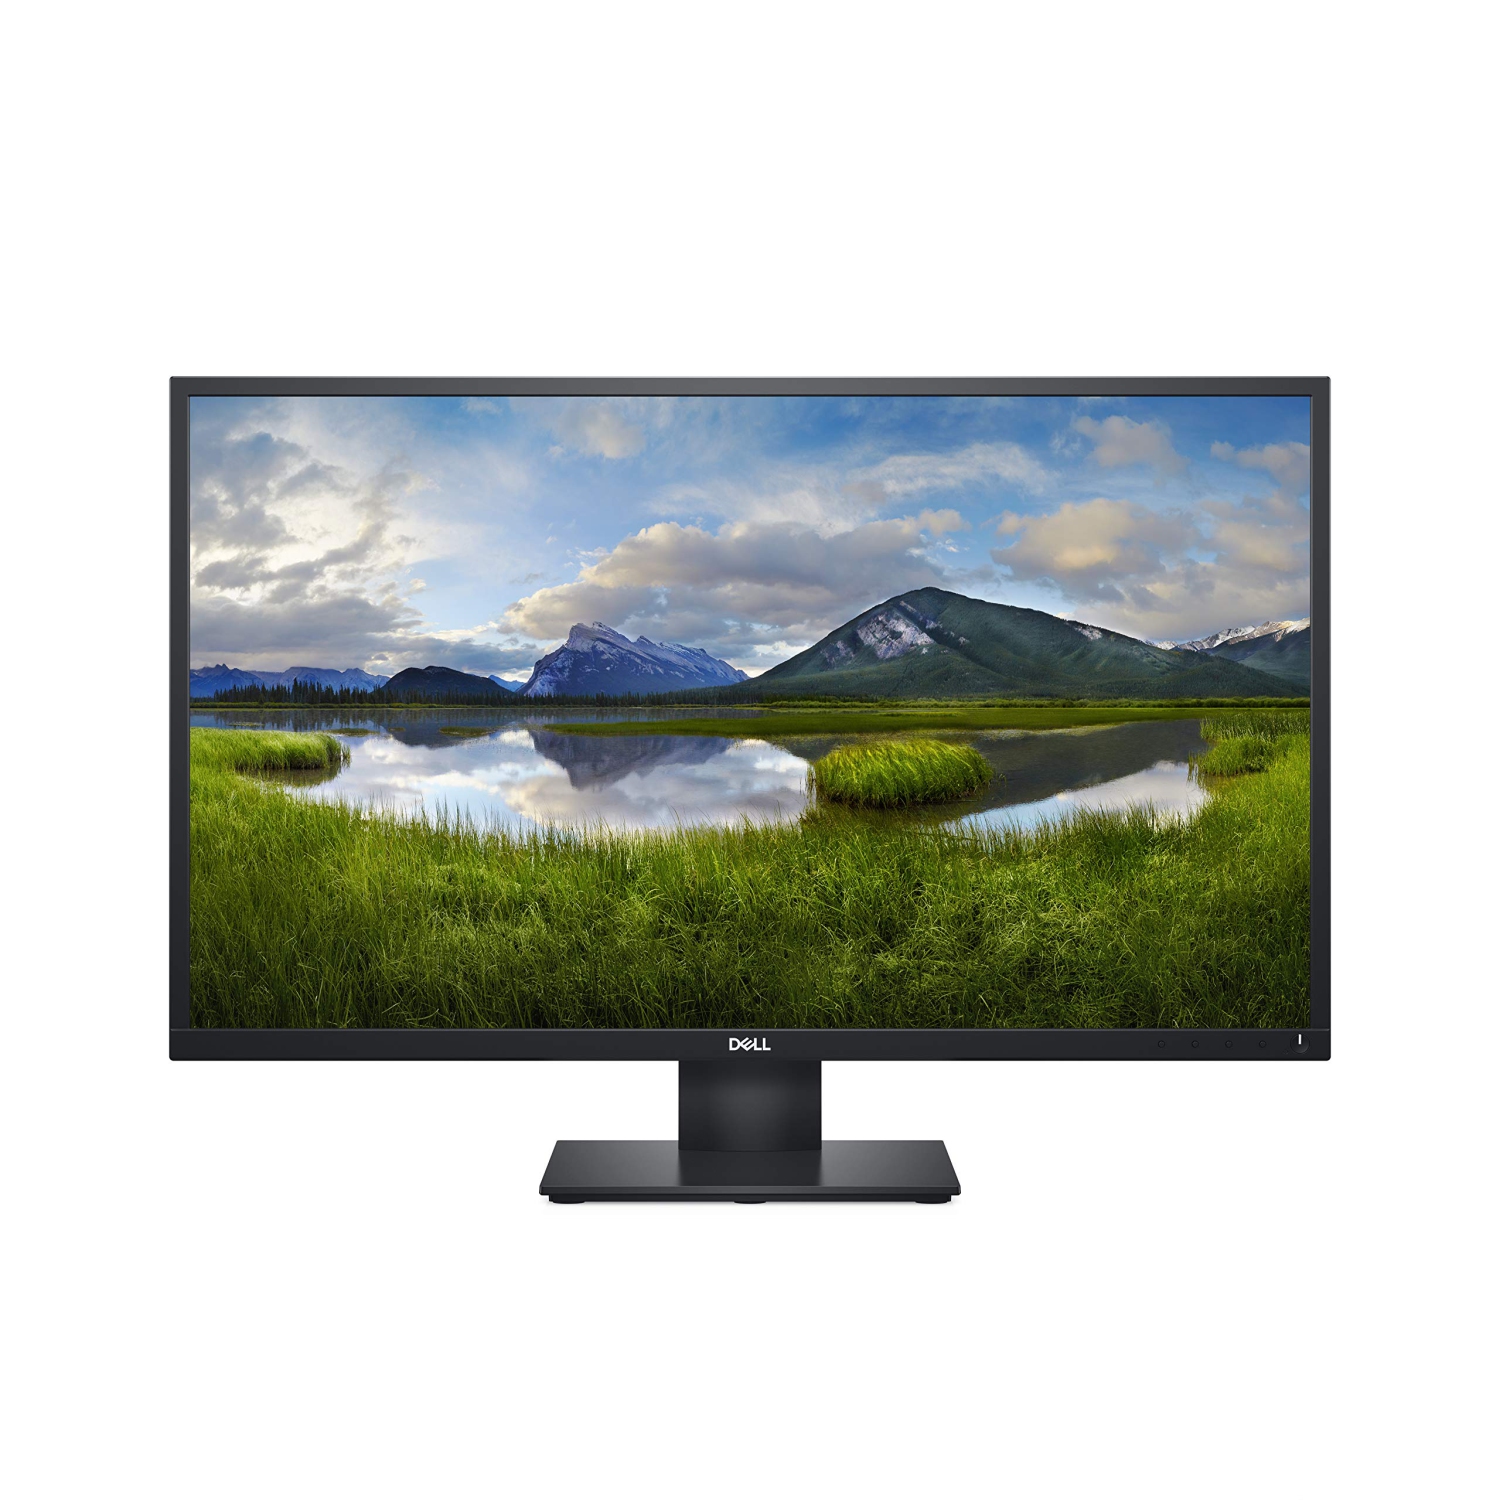 Dell E2720HS 27" Full HD LED LCD Monitor - 16:9 DELL-E2720HS